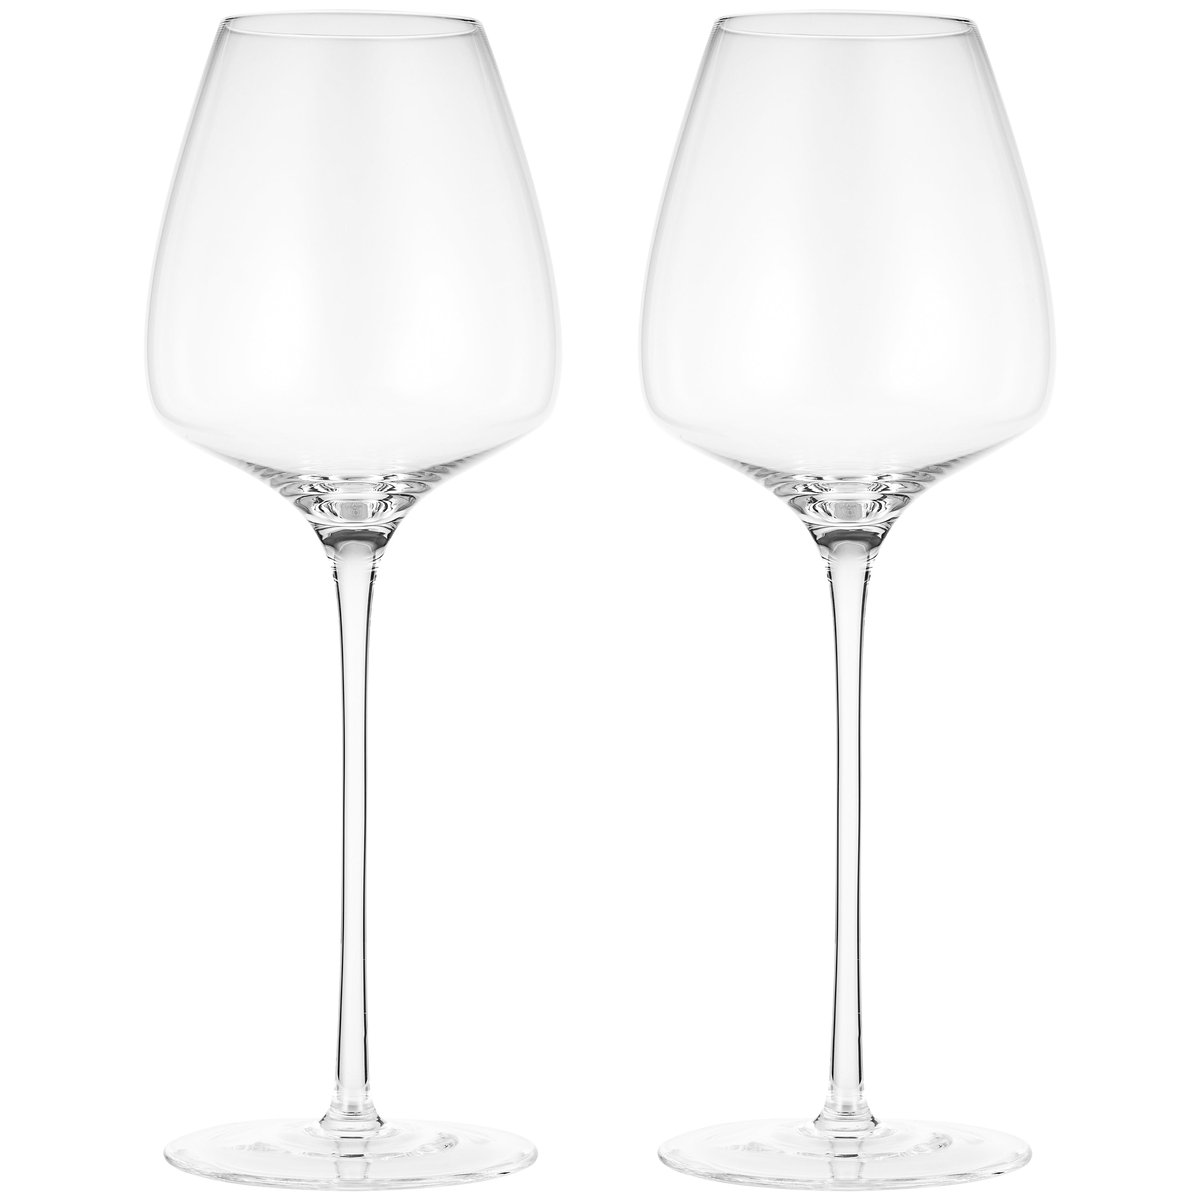 https://images.verishop.com/berkware-classic-white-wine-glass-set-of-6/M00810026178238-1214251402?auto=format&cs=strip&fit=max&w=1200